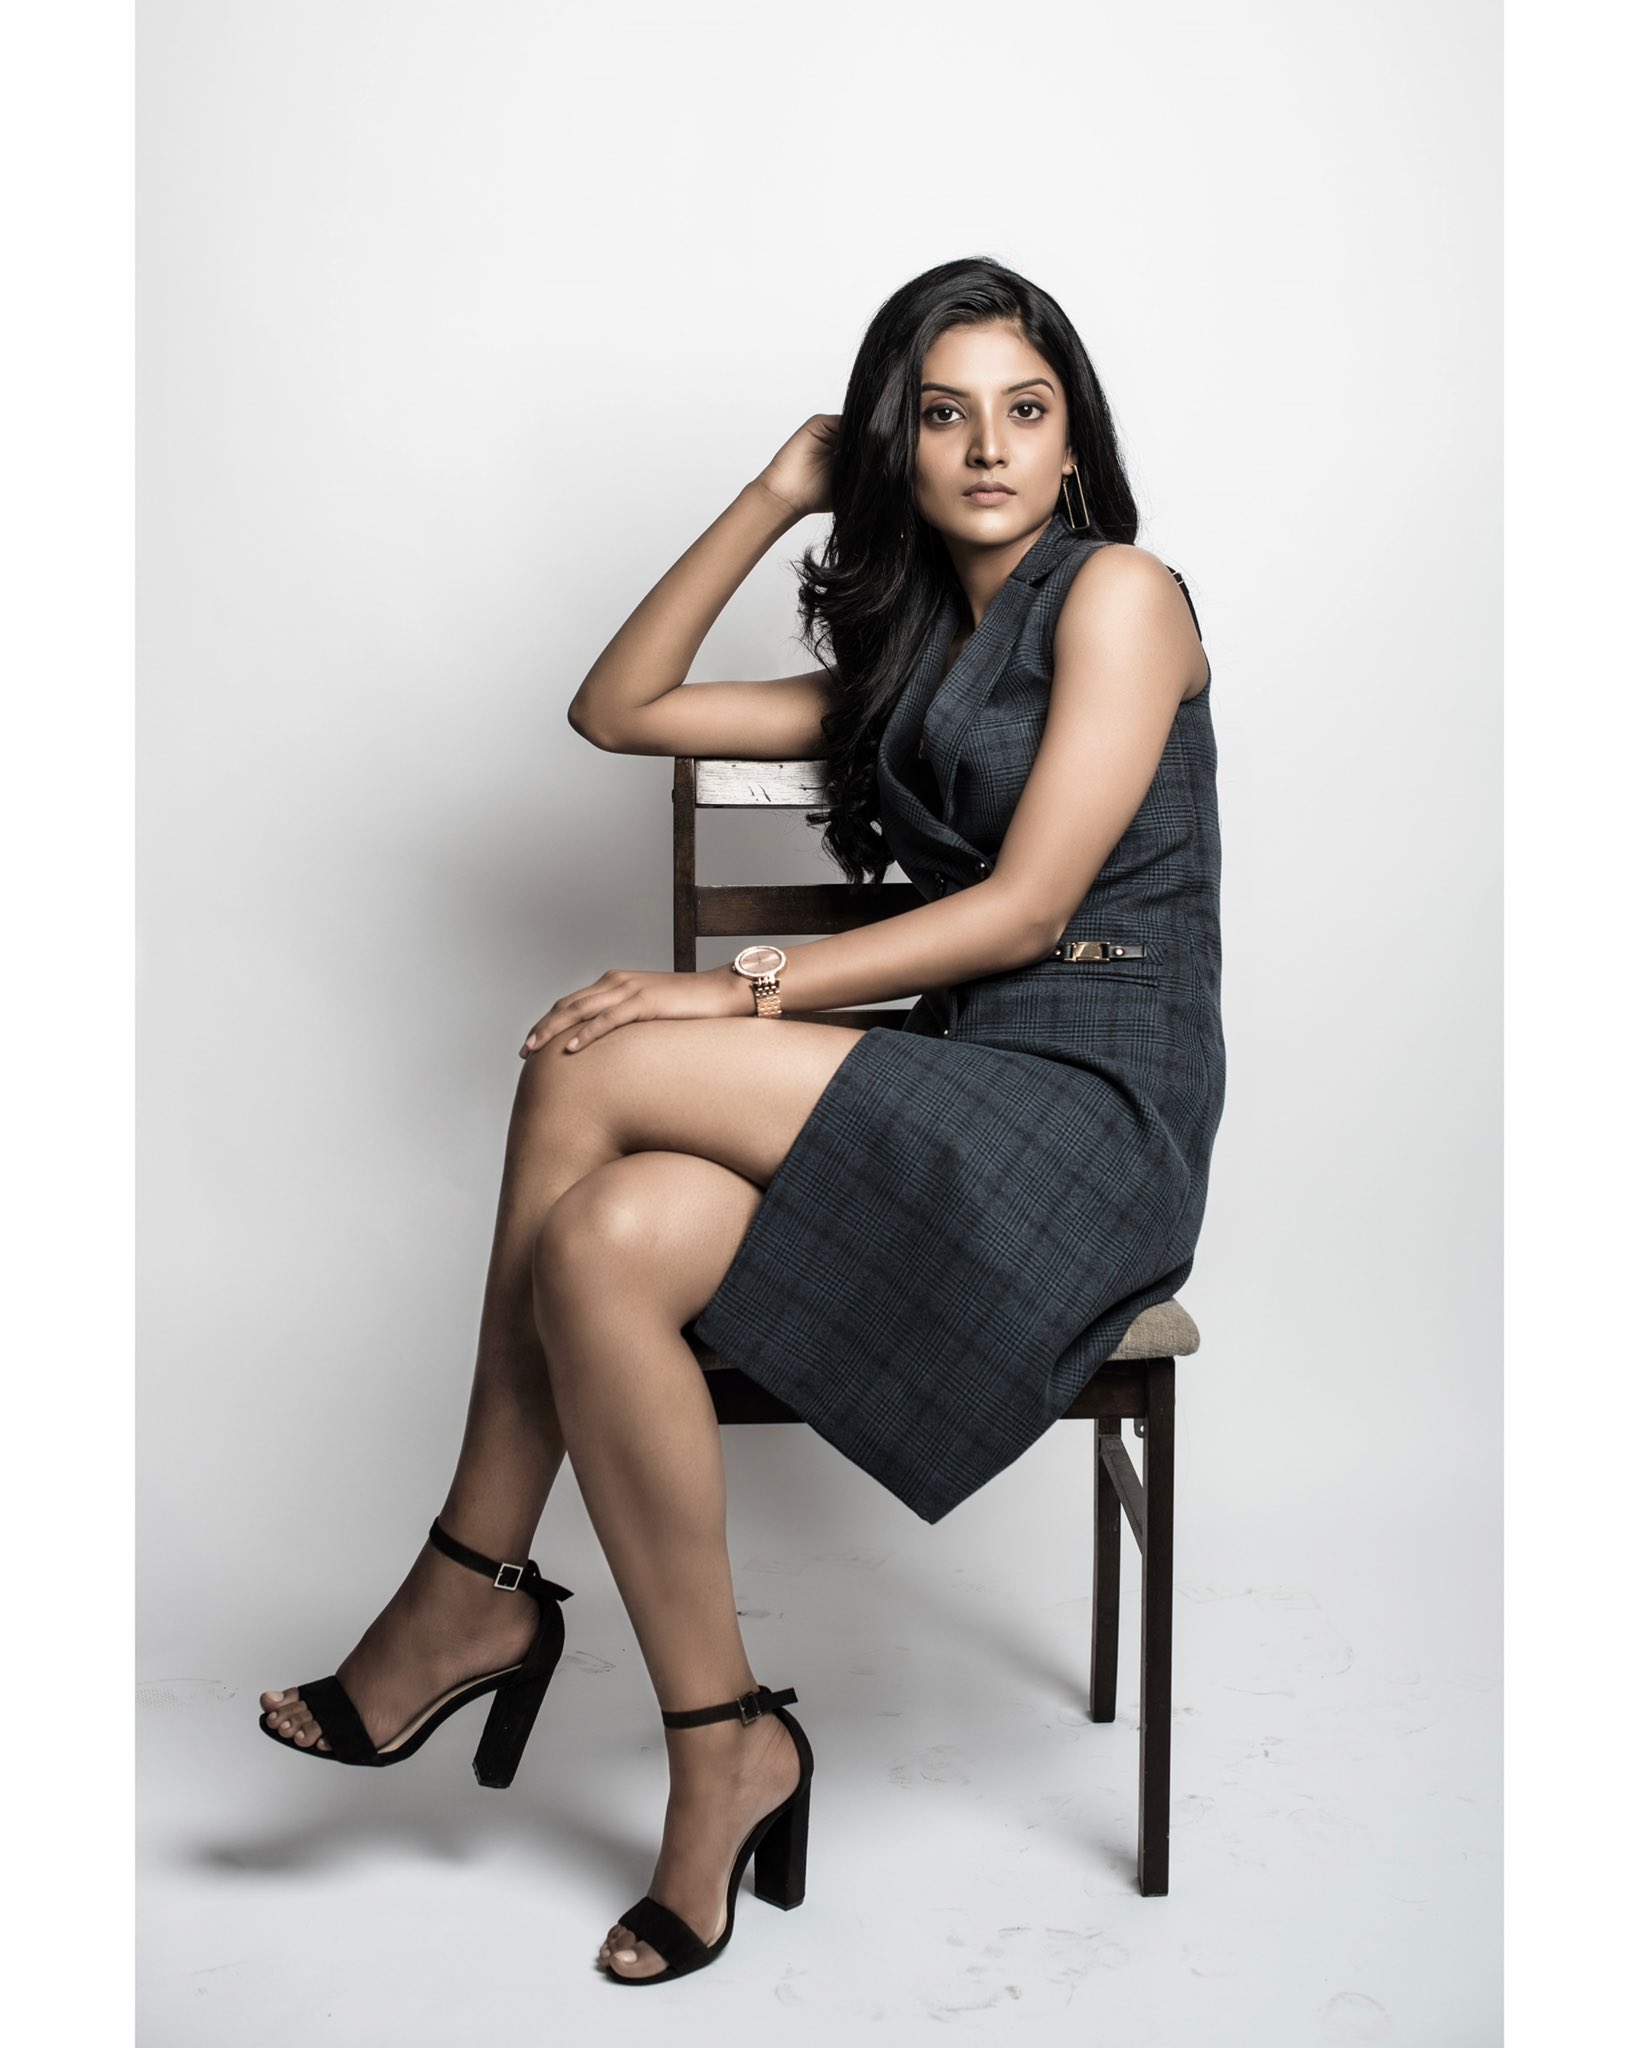 Tamil Actress Nivedhithaa Sathish New Photos (1)